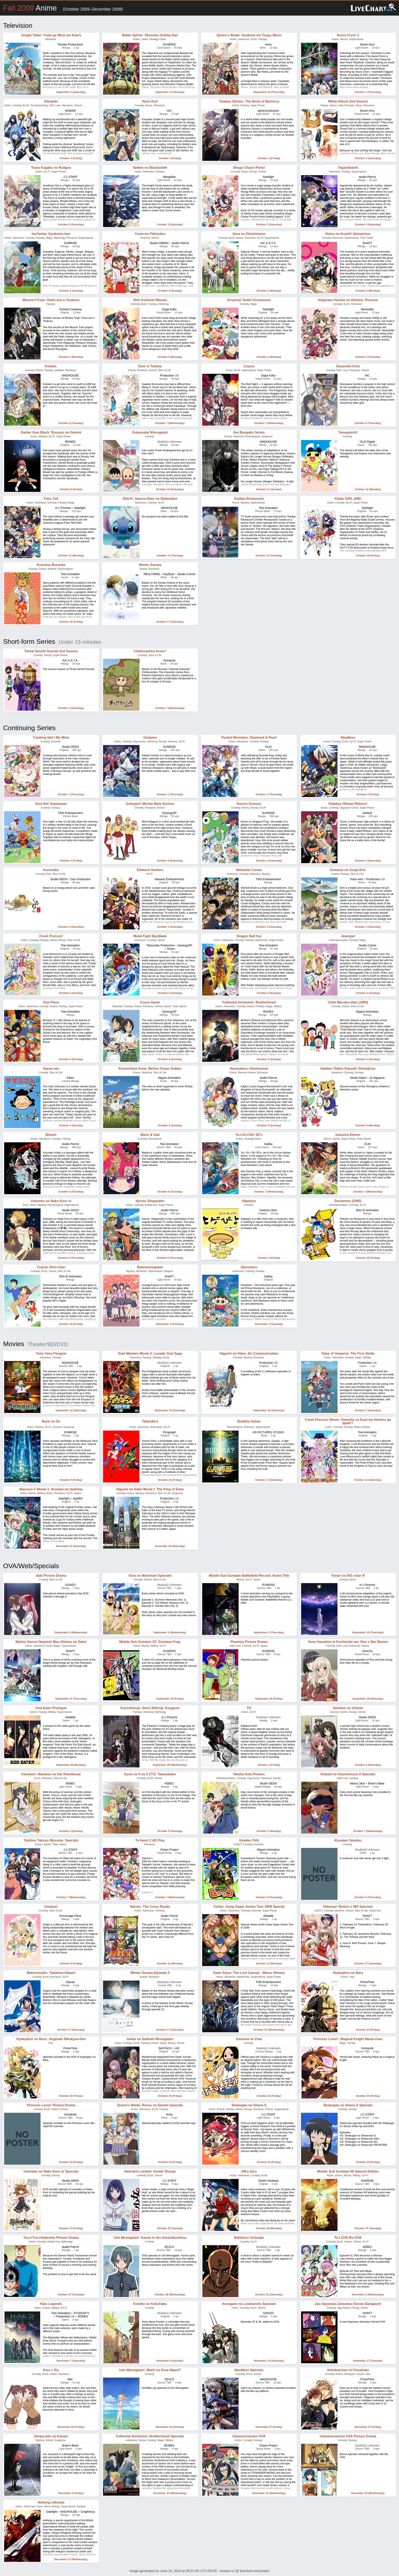 Calendar 2009 - Calendar (Source) - Zerochan Anime Image Board